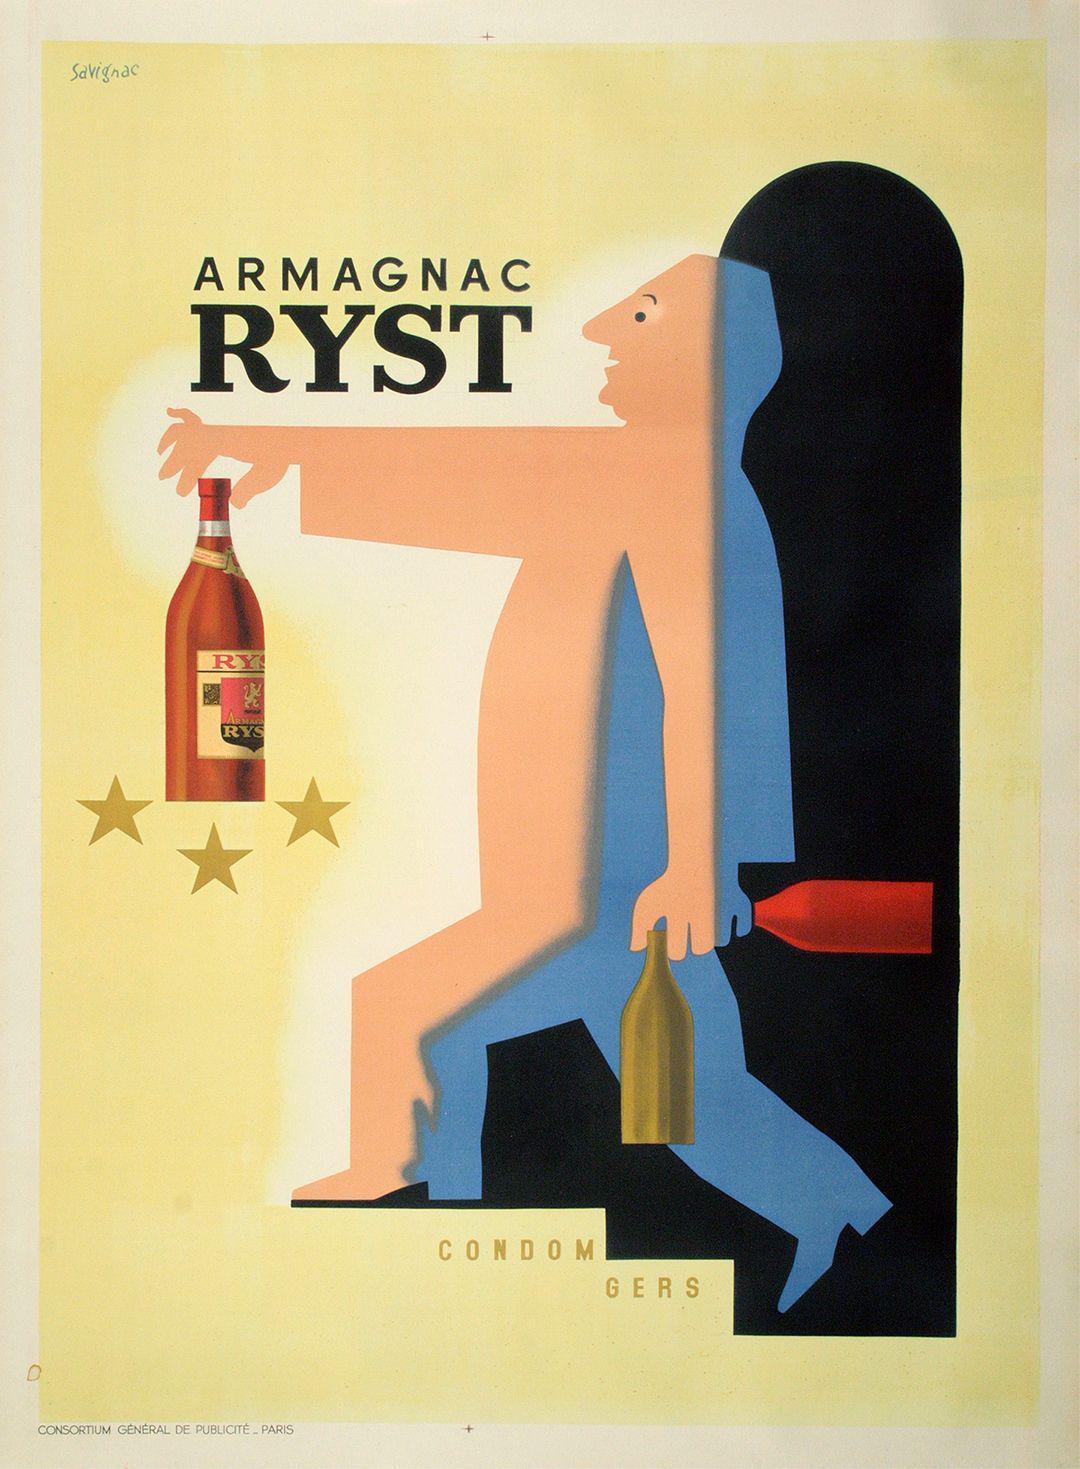 Armagnac Ryst Original French Liquor Poster 1943 by Raymond Savignac